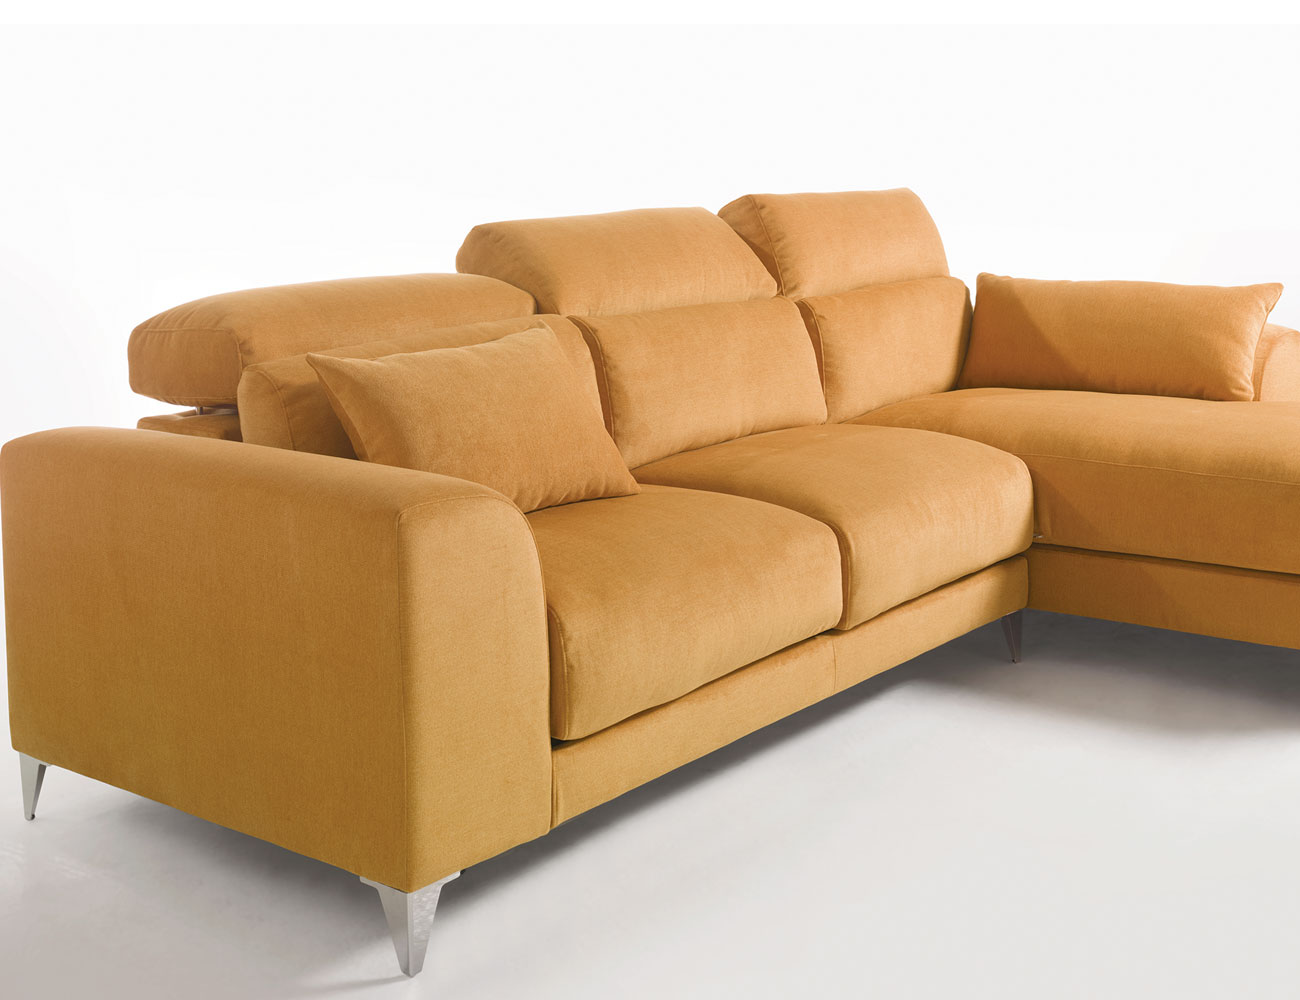 Sofa chaiselongue gran lujo decorativo patas altas amarillo 23